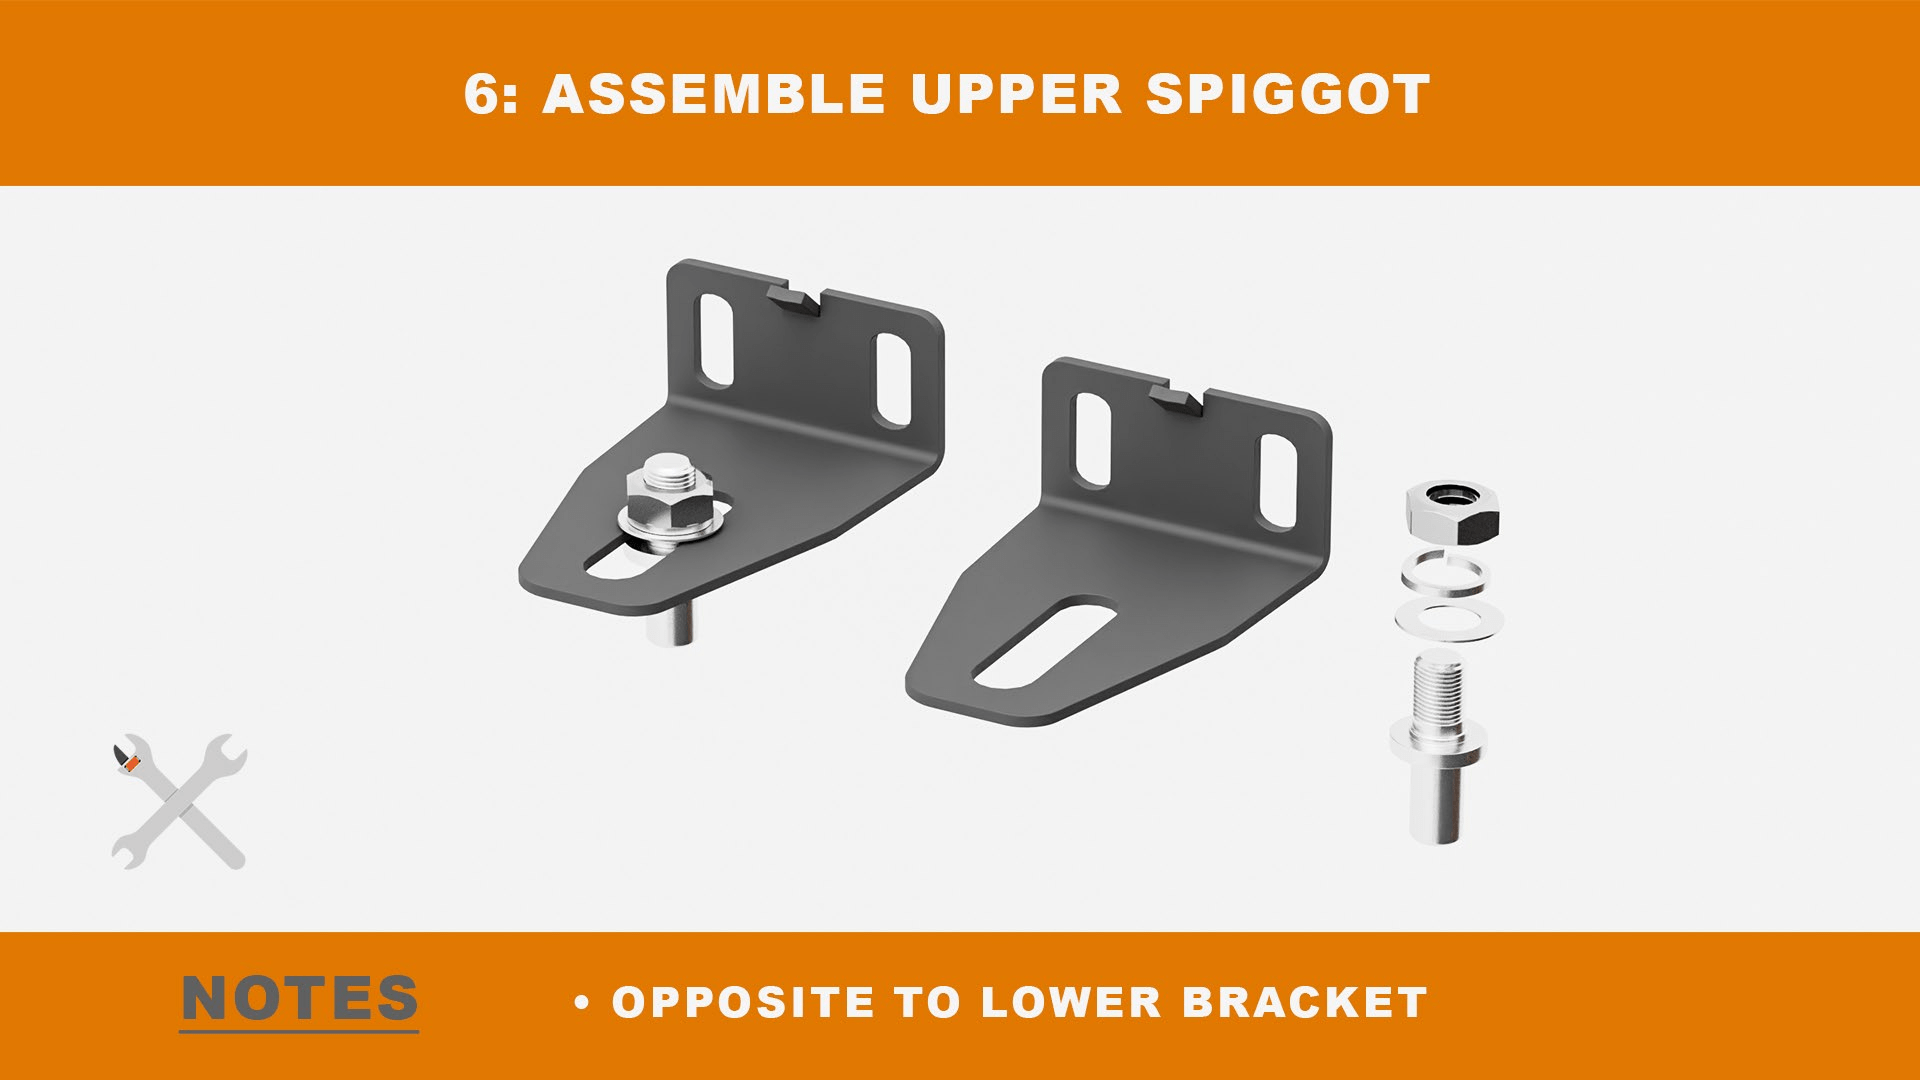 Assemble the upper spigot diagram